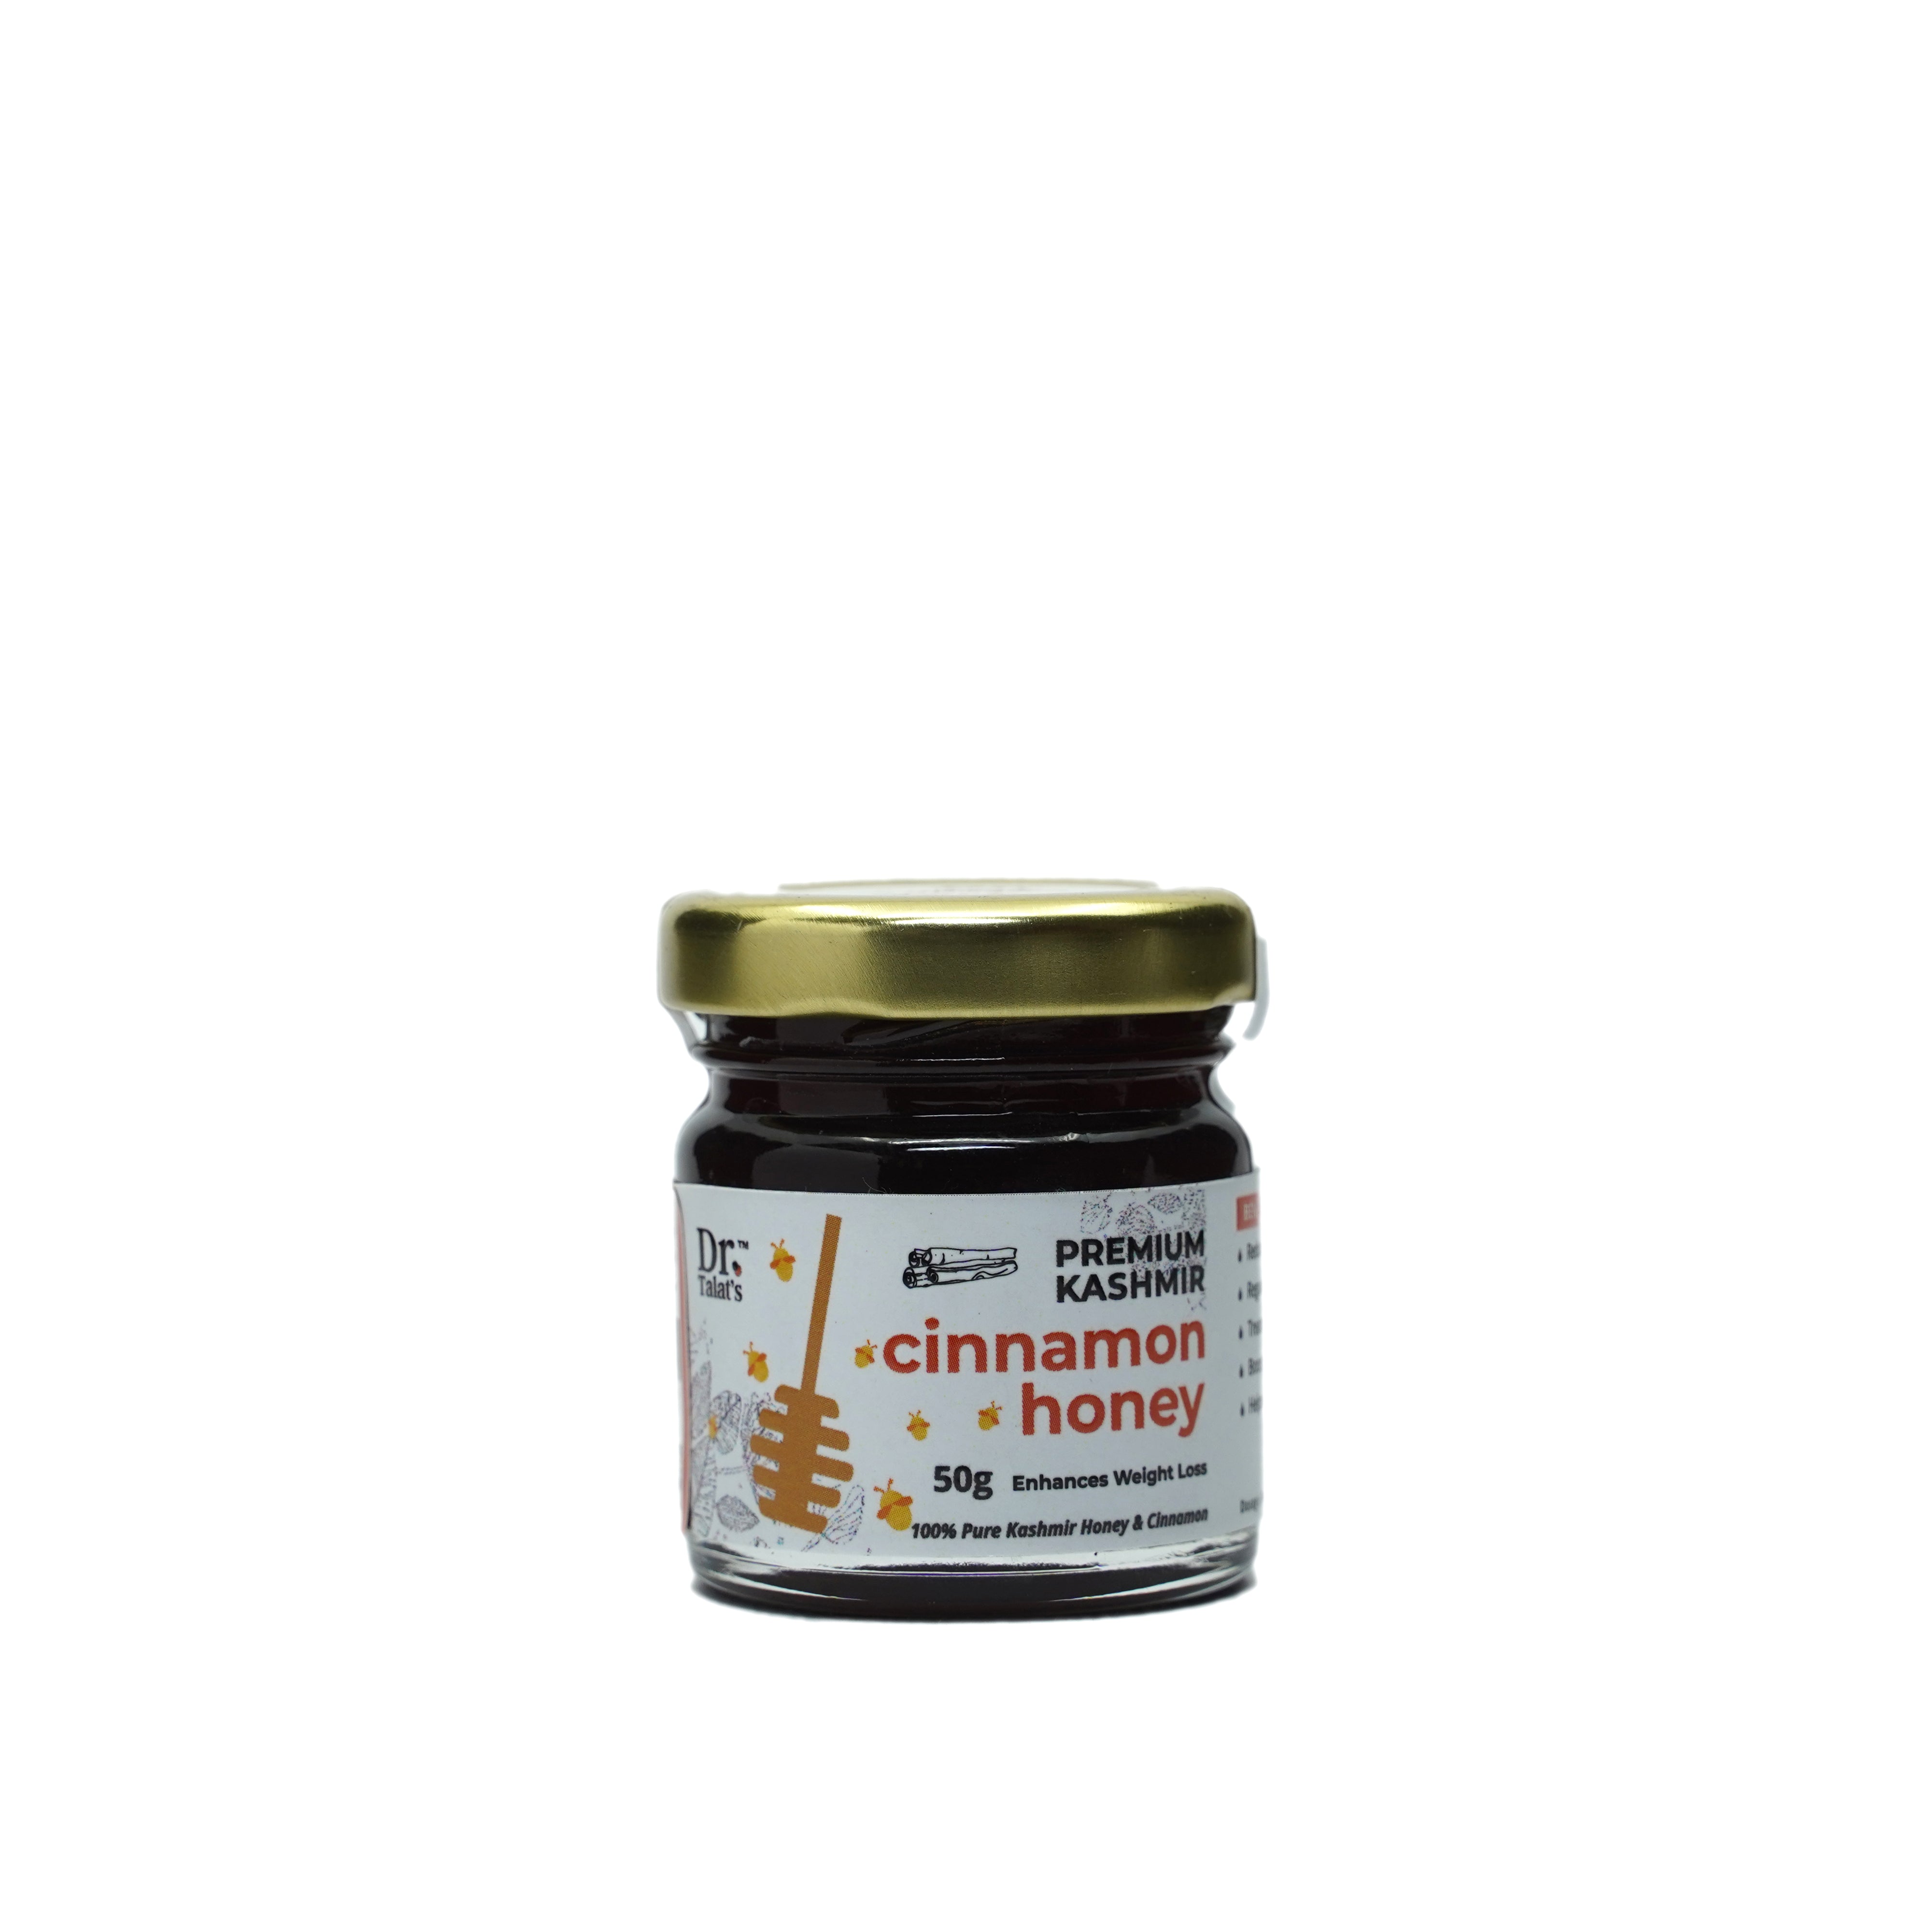 Premium Kashmir Cinnamon Honey